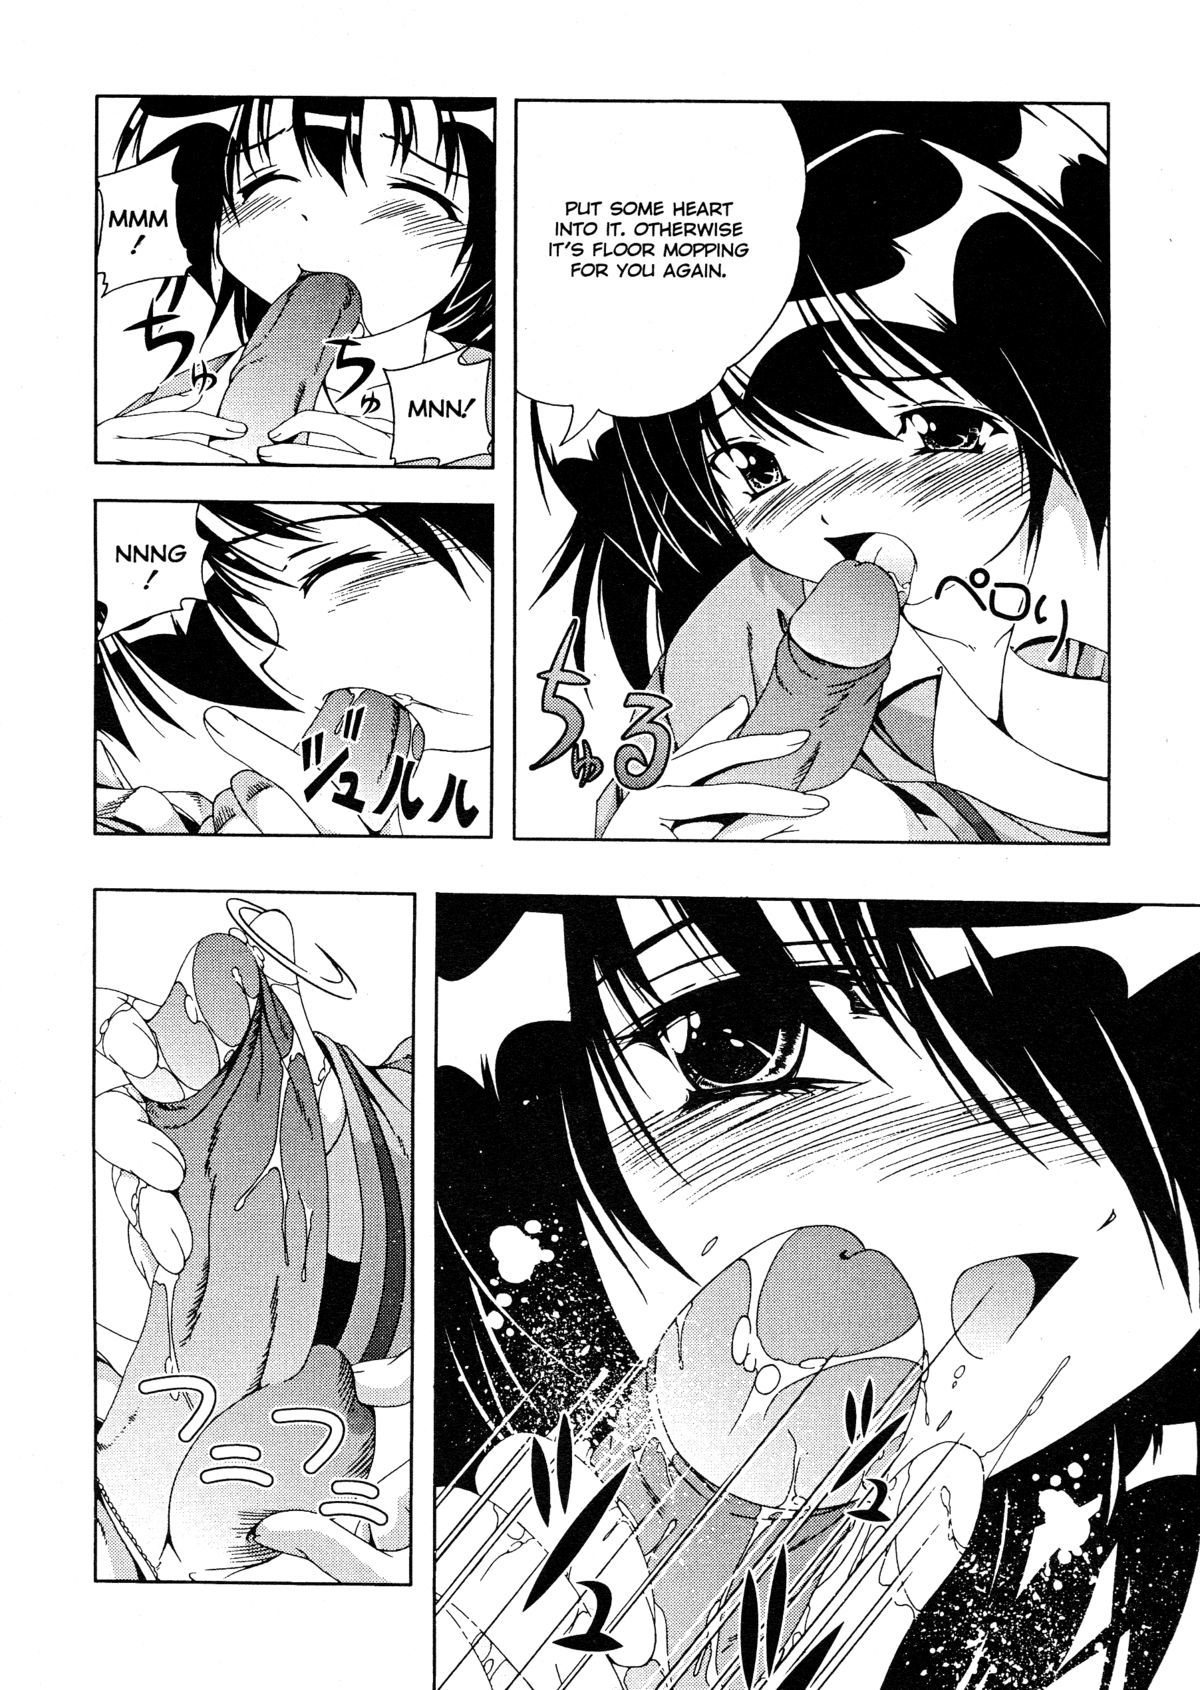 Flashbang!Hi-res 29 hentai manga